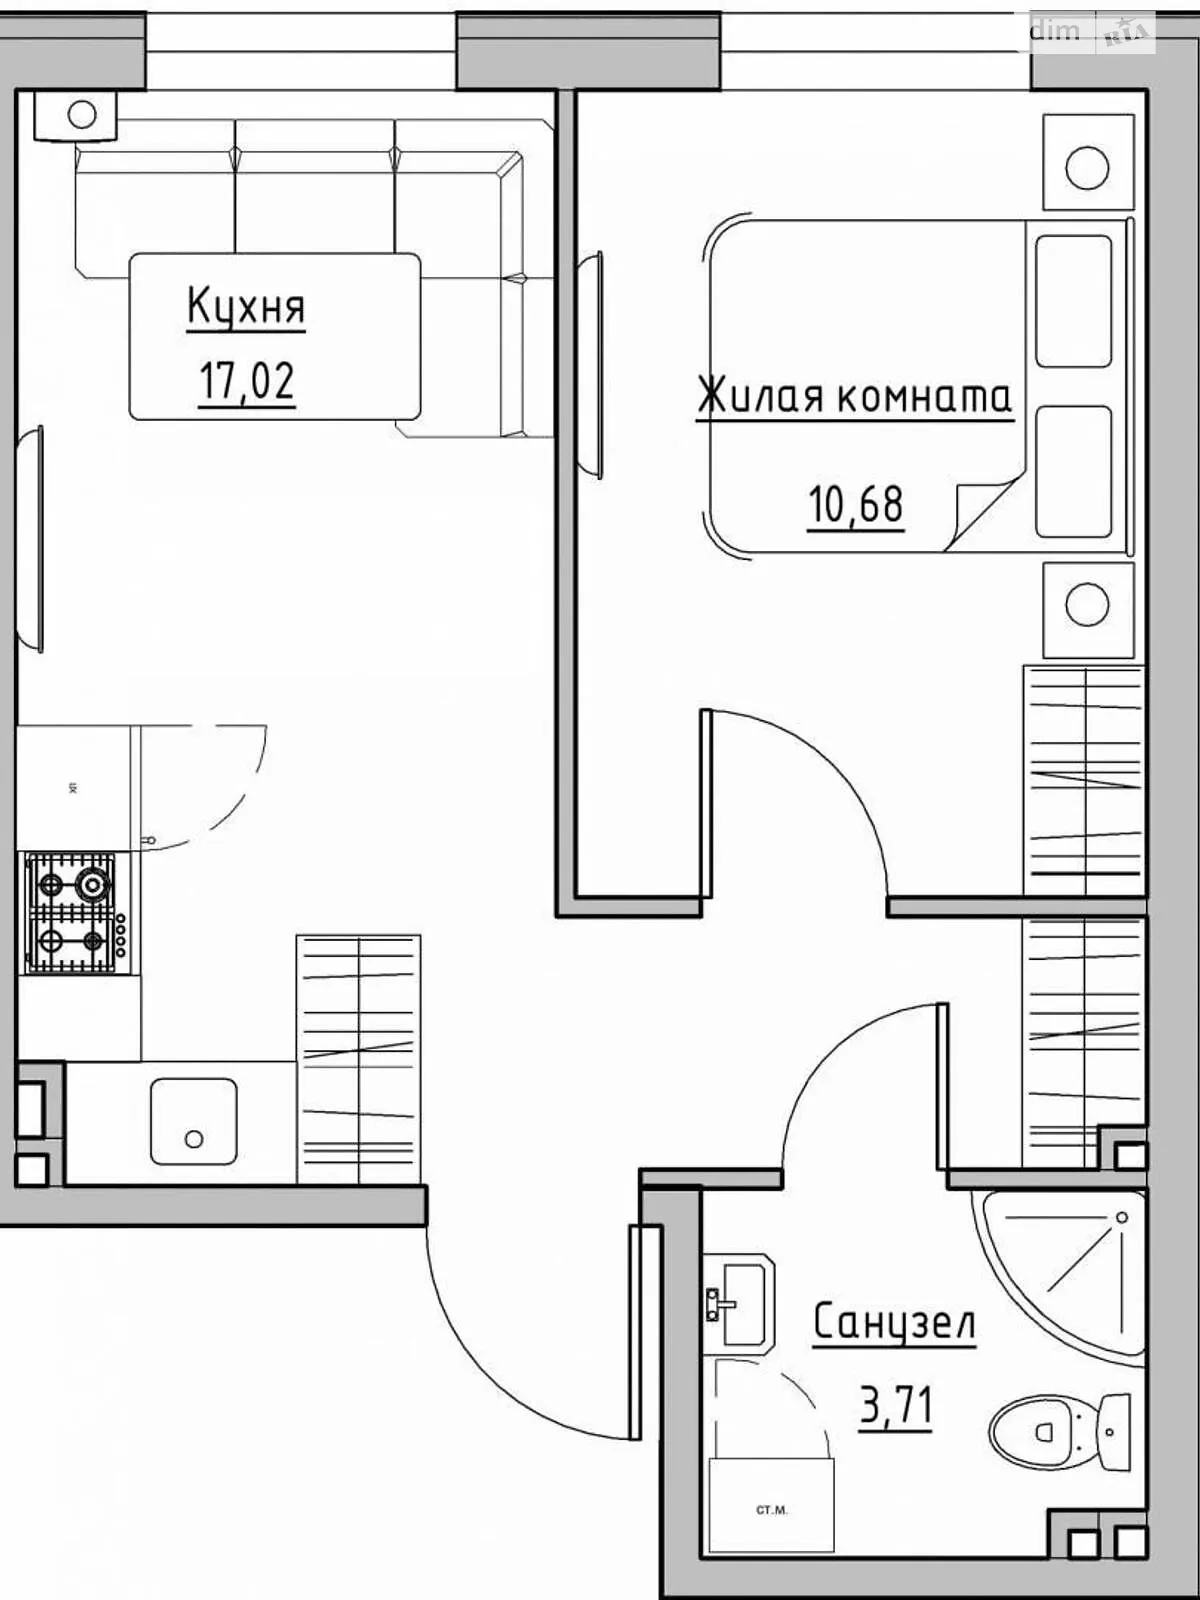 Продается 1-комнатная квартира 31.58 кв. м в Авангарде, ул. Озерная ул.